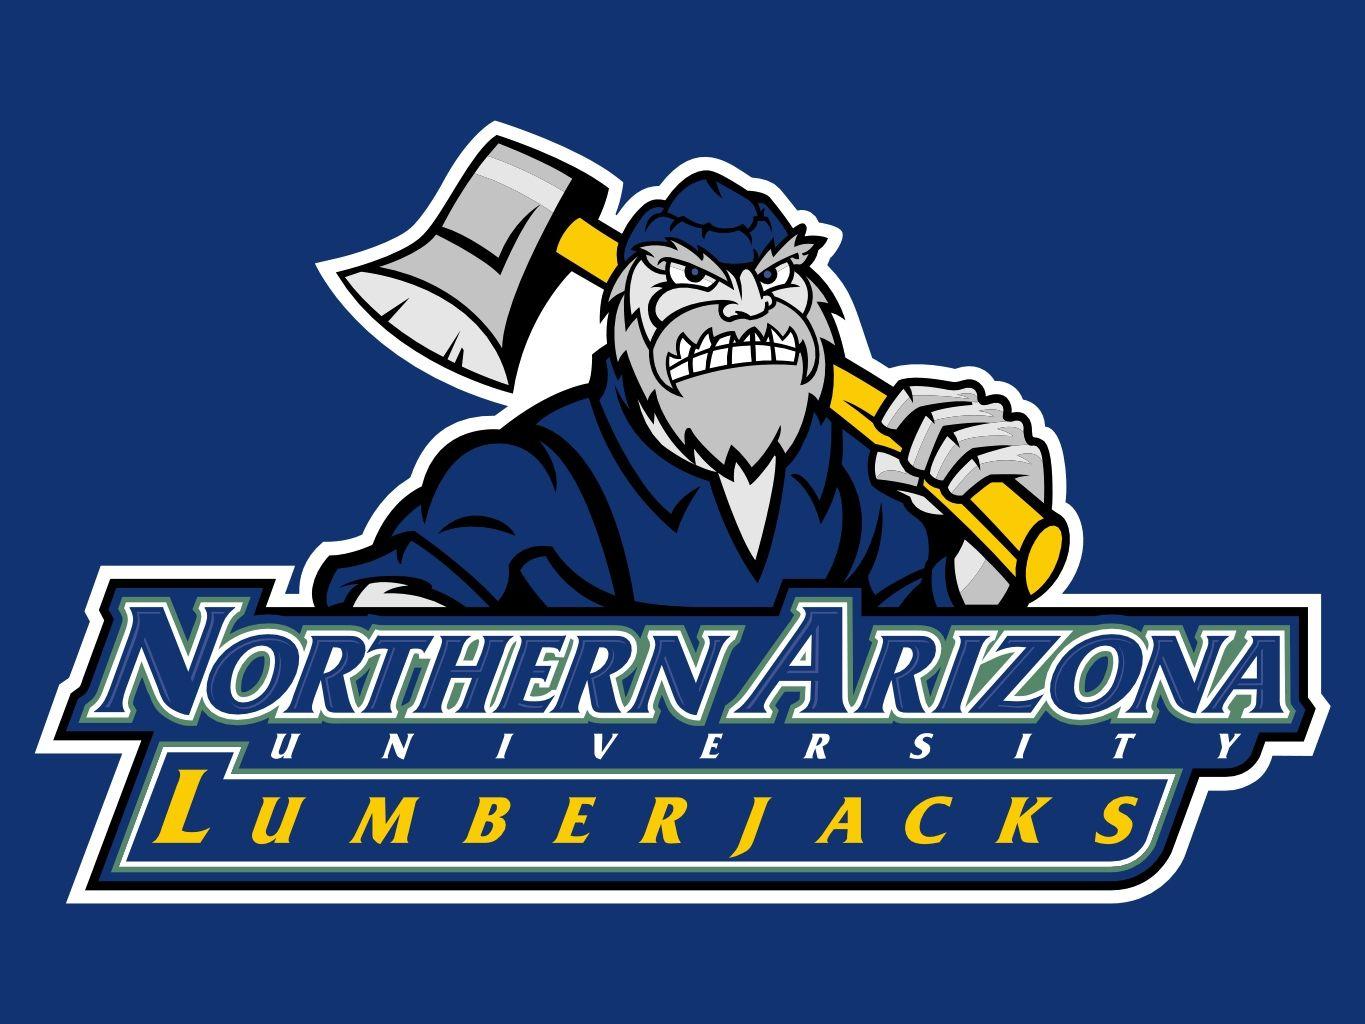 Northern Arizona Logo - Northern arizona university lumberjacks Logos